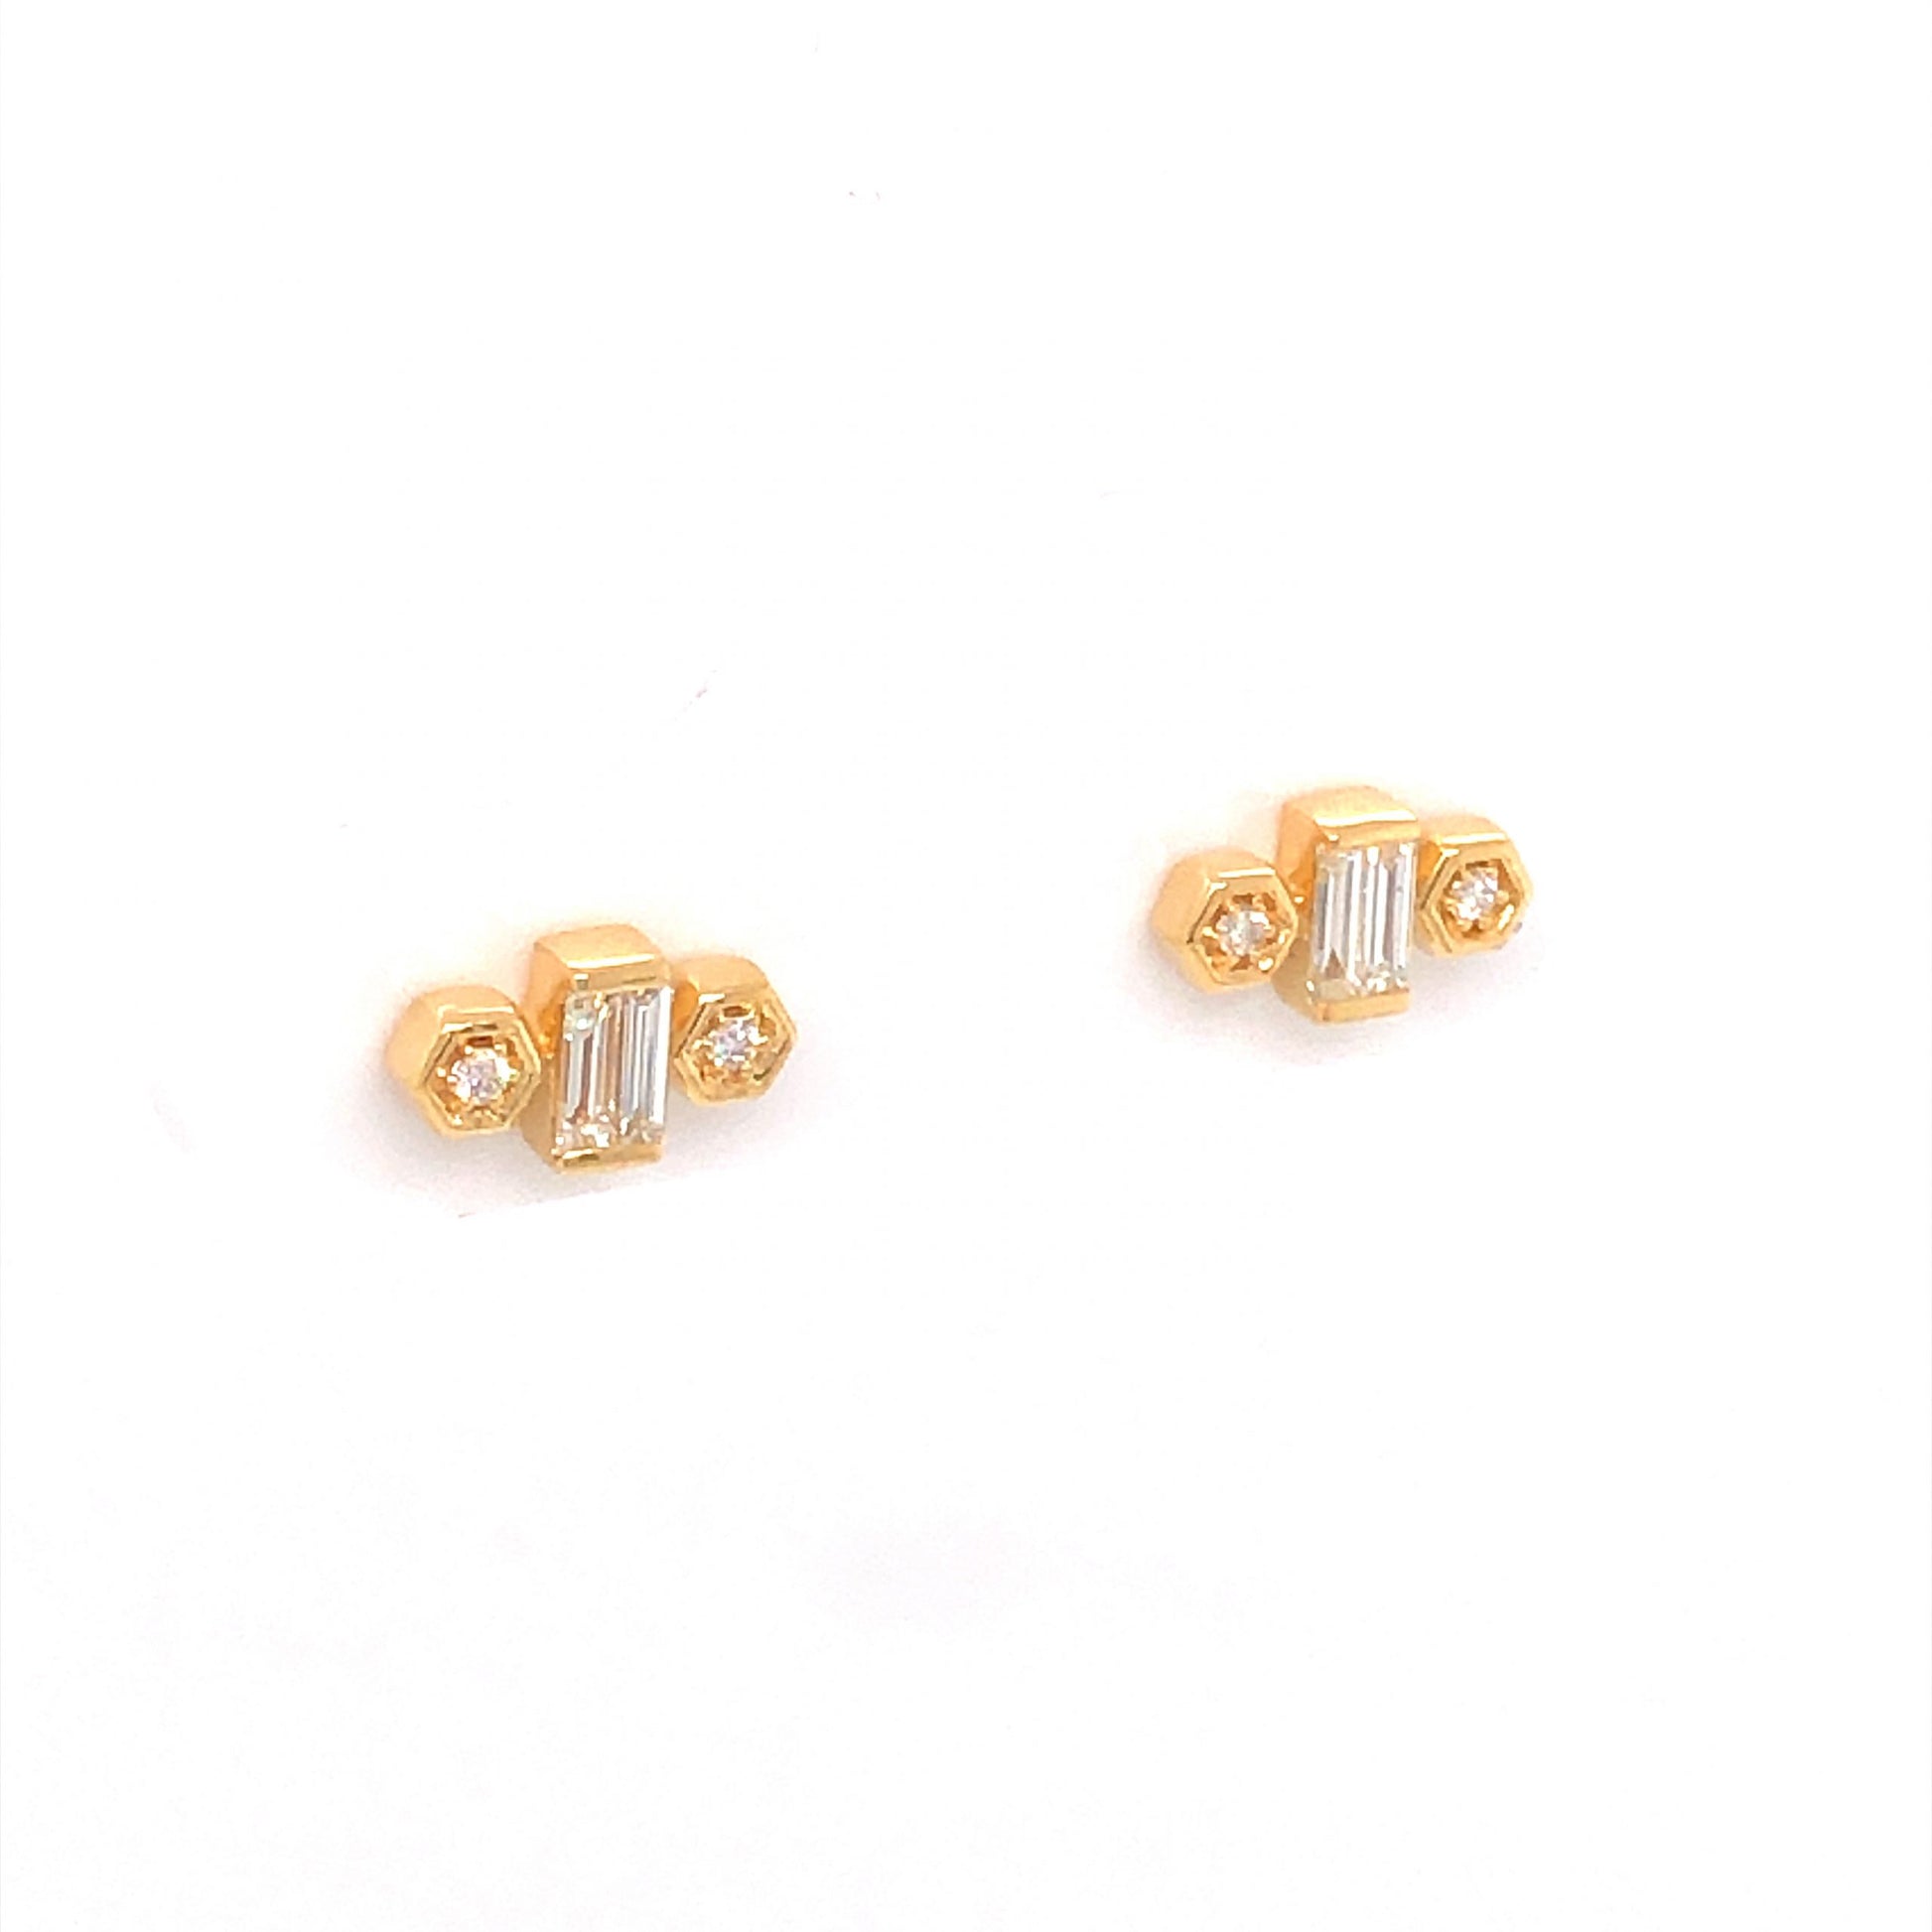 .17 Baguette Diamond Earrings in 18k Yellow GoldComposition: 18 Karat Yellow GoldTotal Diamond Weight: .17 ctTotal Gram Weight: 1.7 gInscription: 750